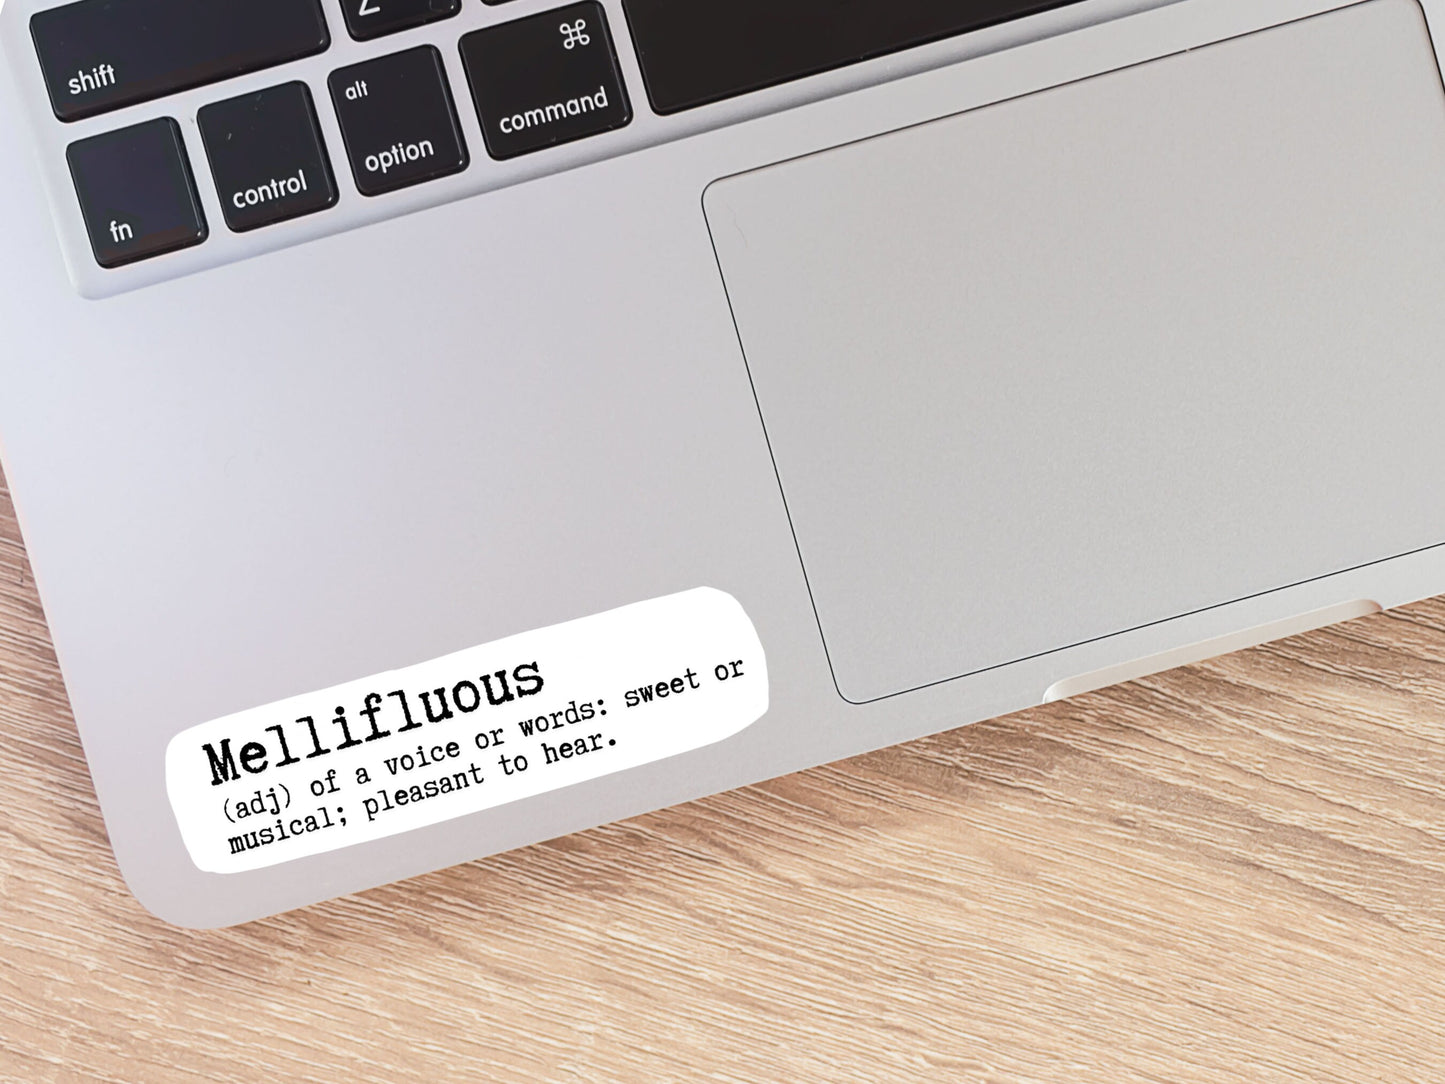 Mellifluous Definition Sticker | Dictionary Decal | Laptop Sticker